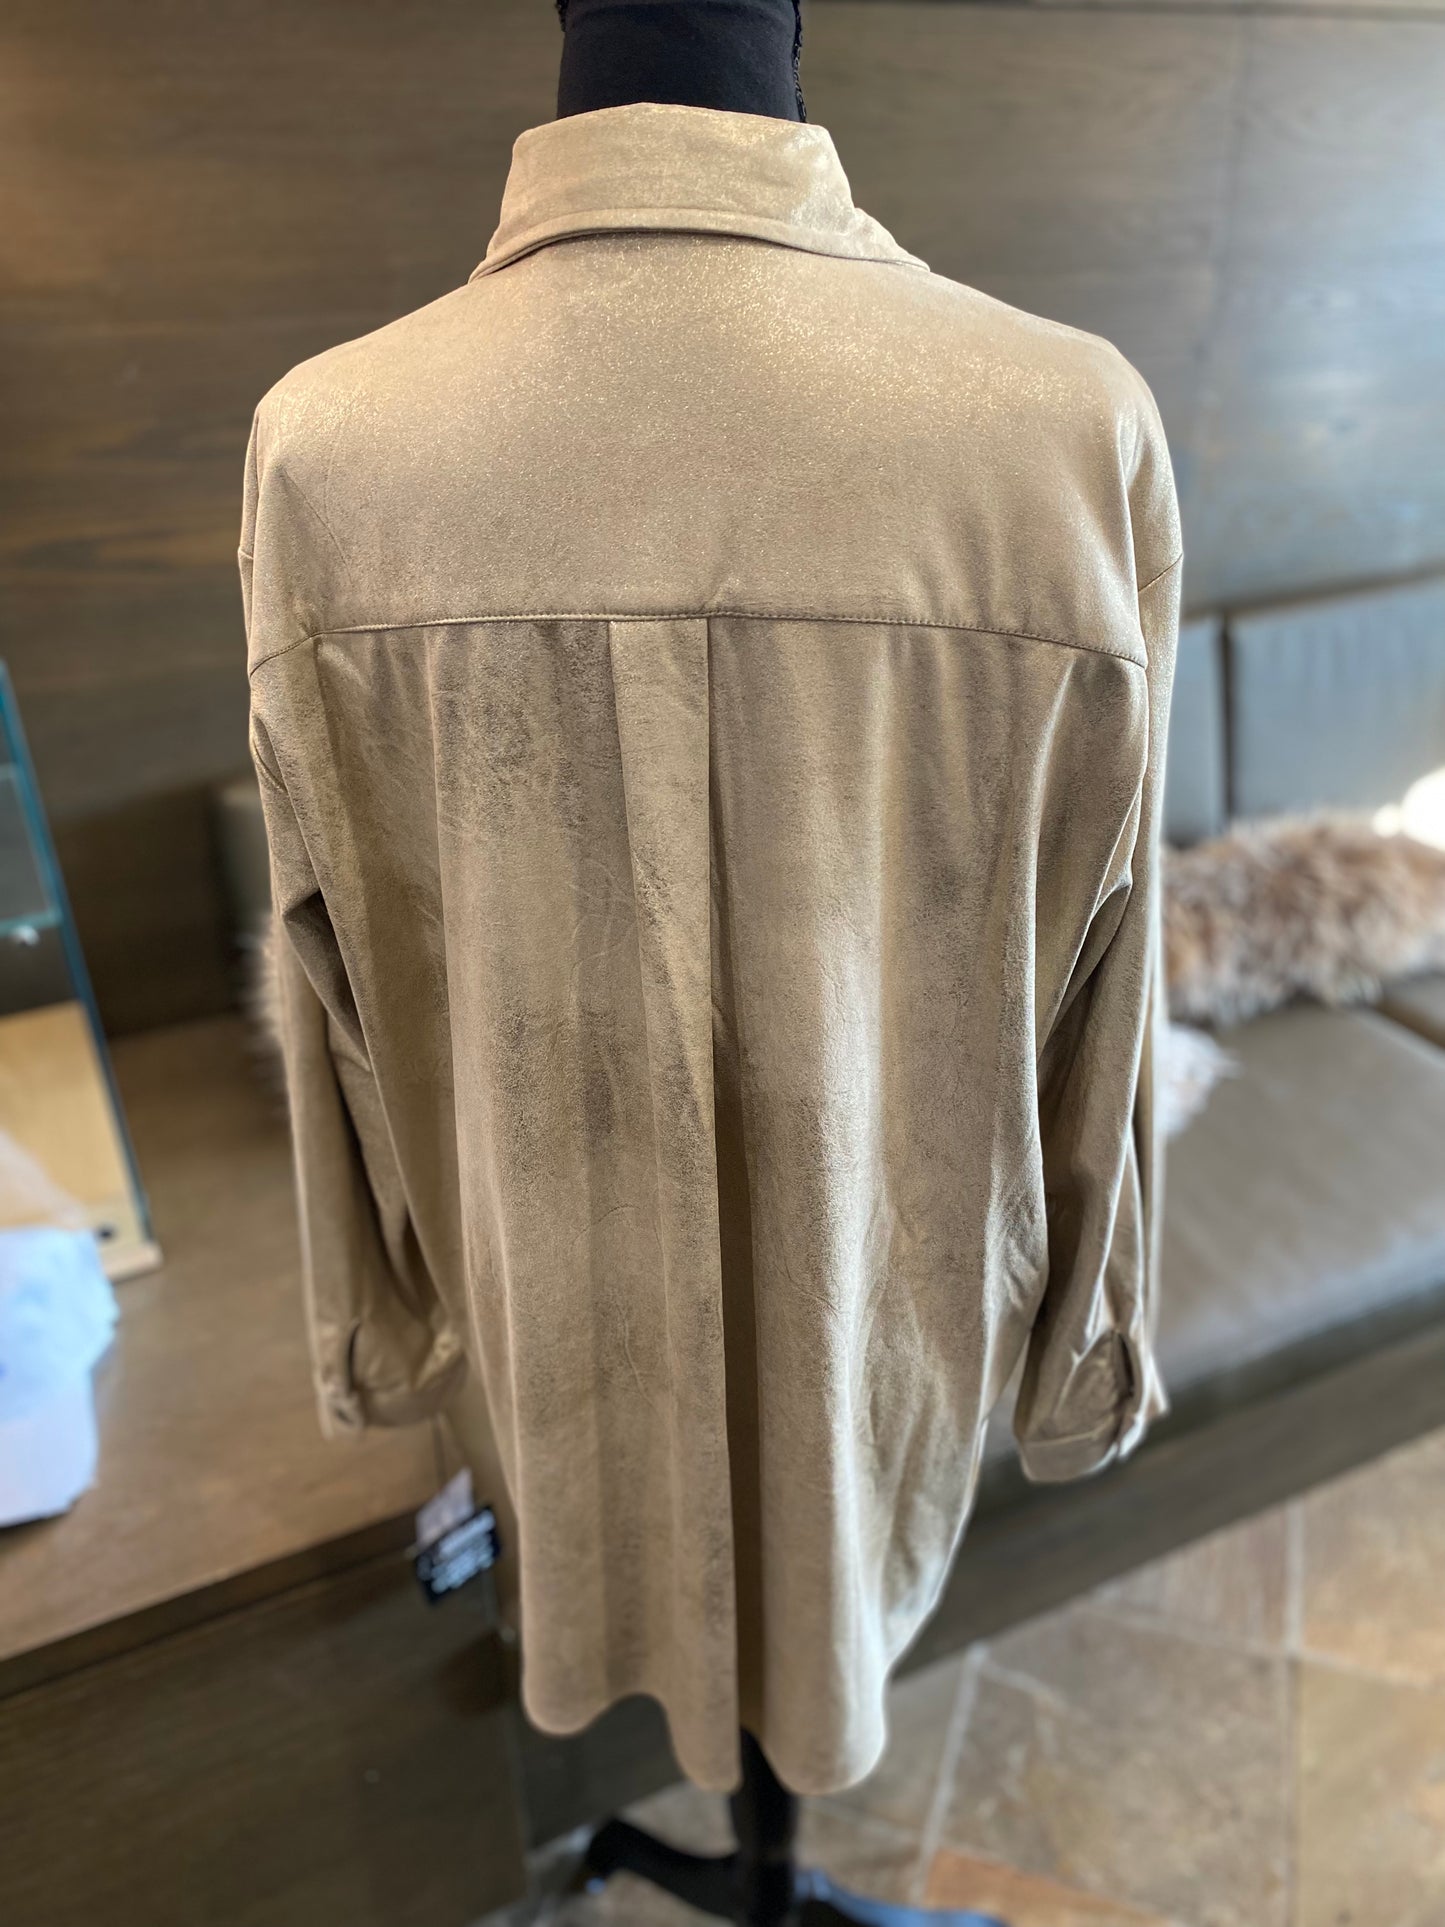 Insight Gold Leather Look Shacket Shirt Jacket Yellowstone Inspired